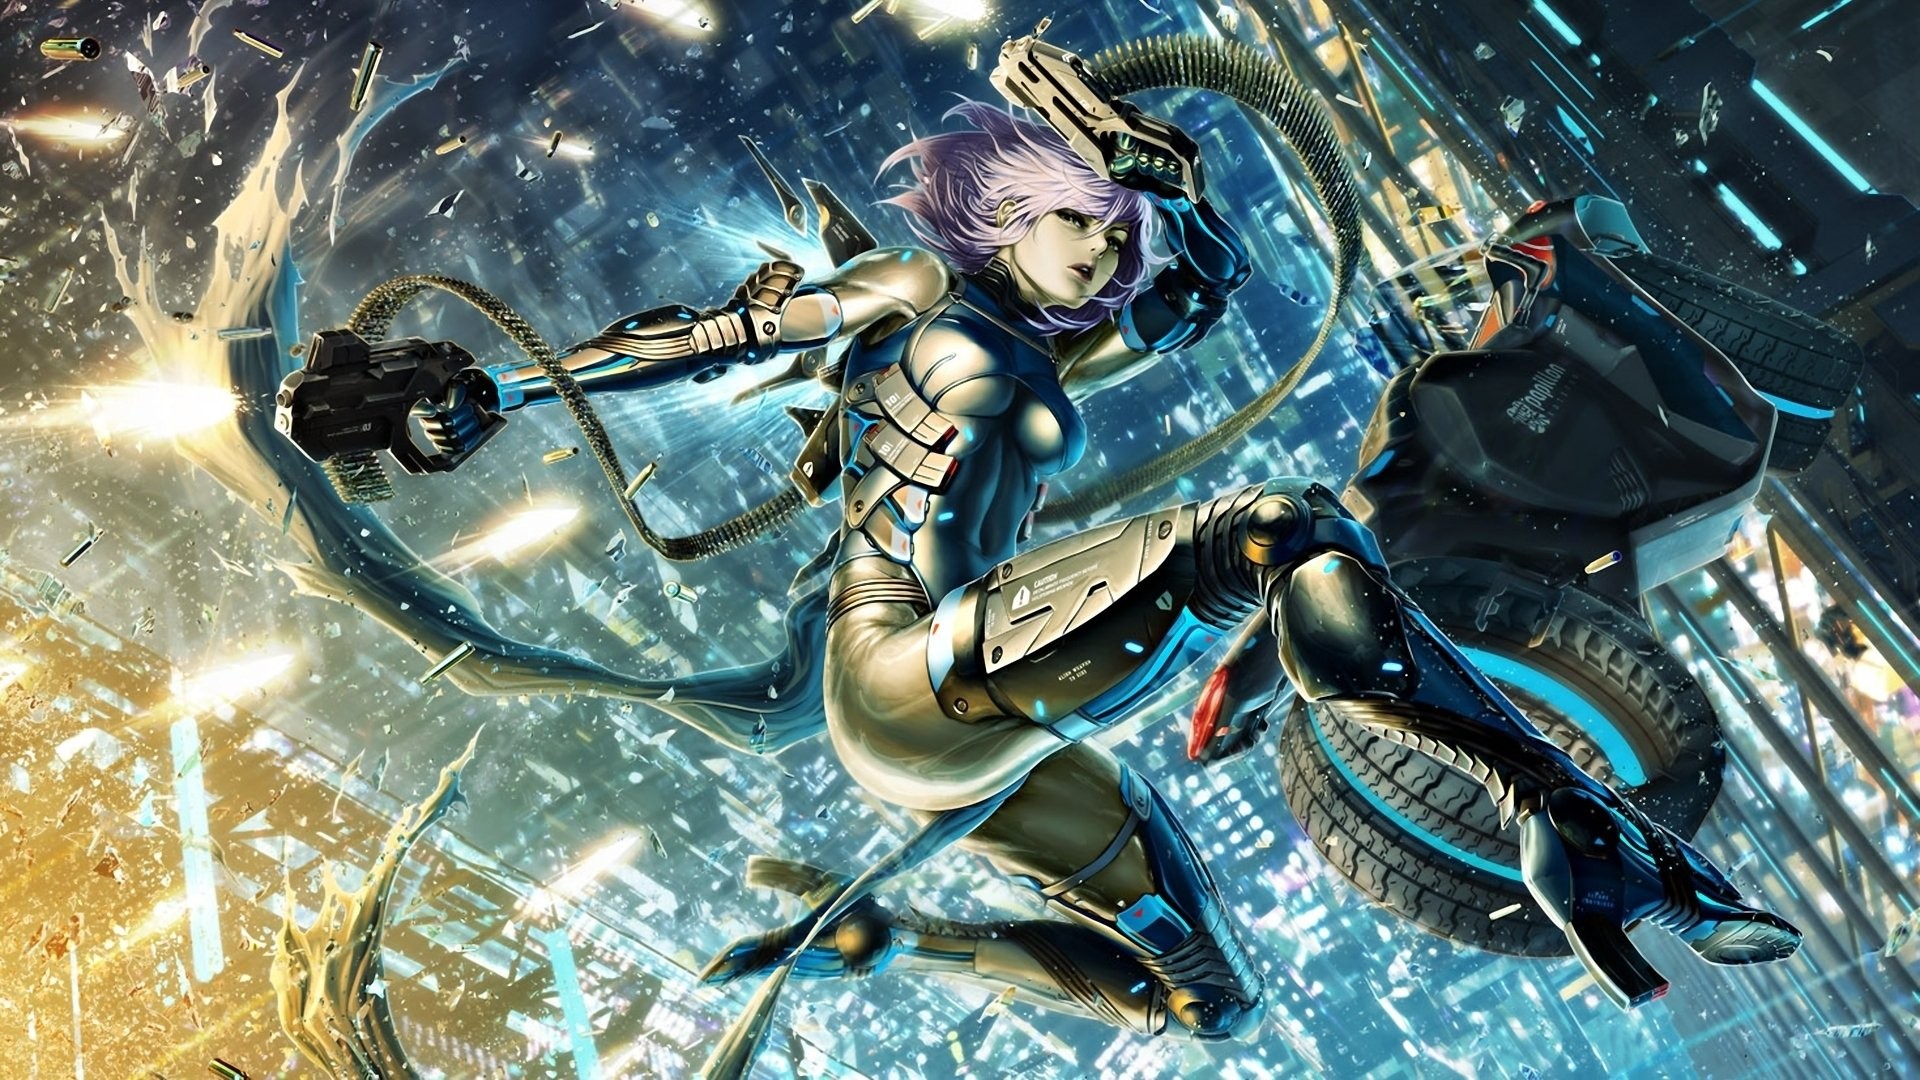 Artwork Fantasy Art Anime Cyborg Futuristic City Original Characters Cyberpunk Anime Girls 1920x1080